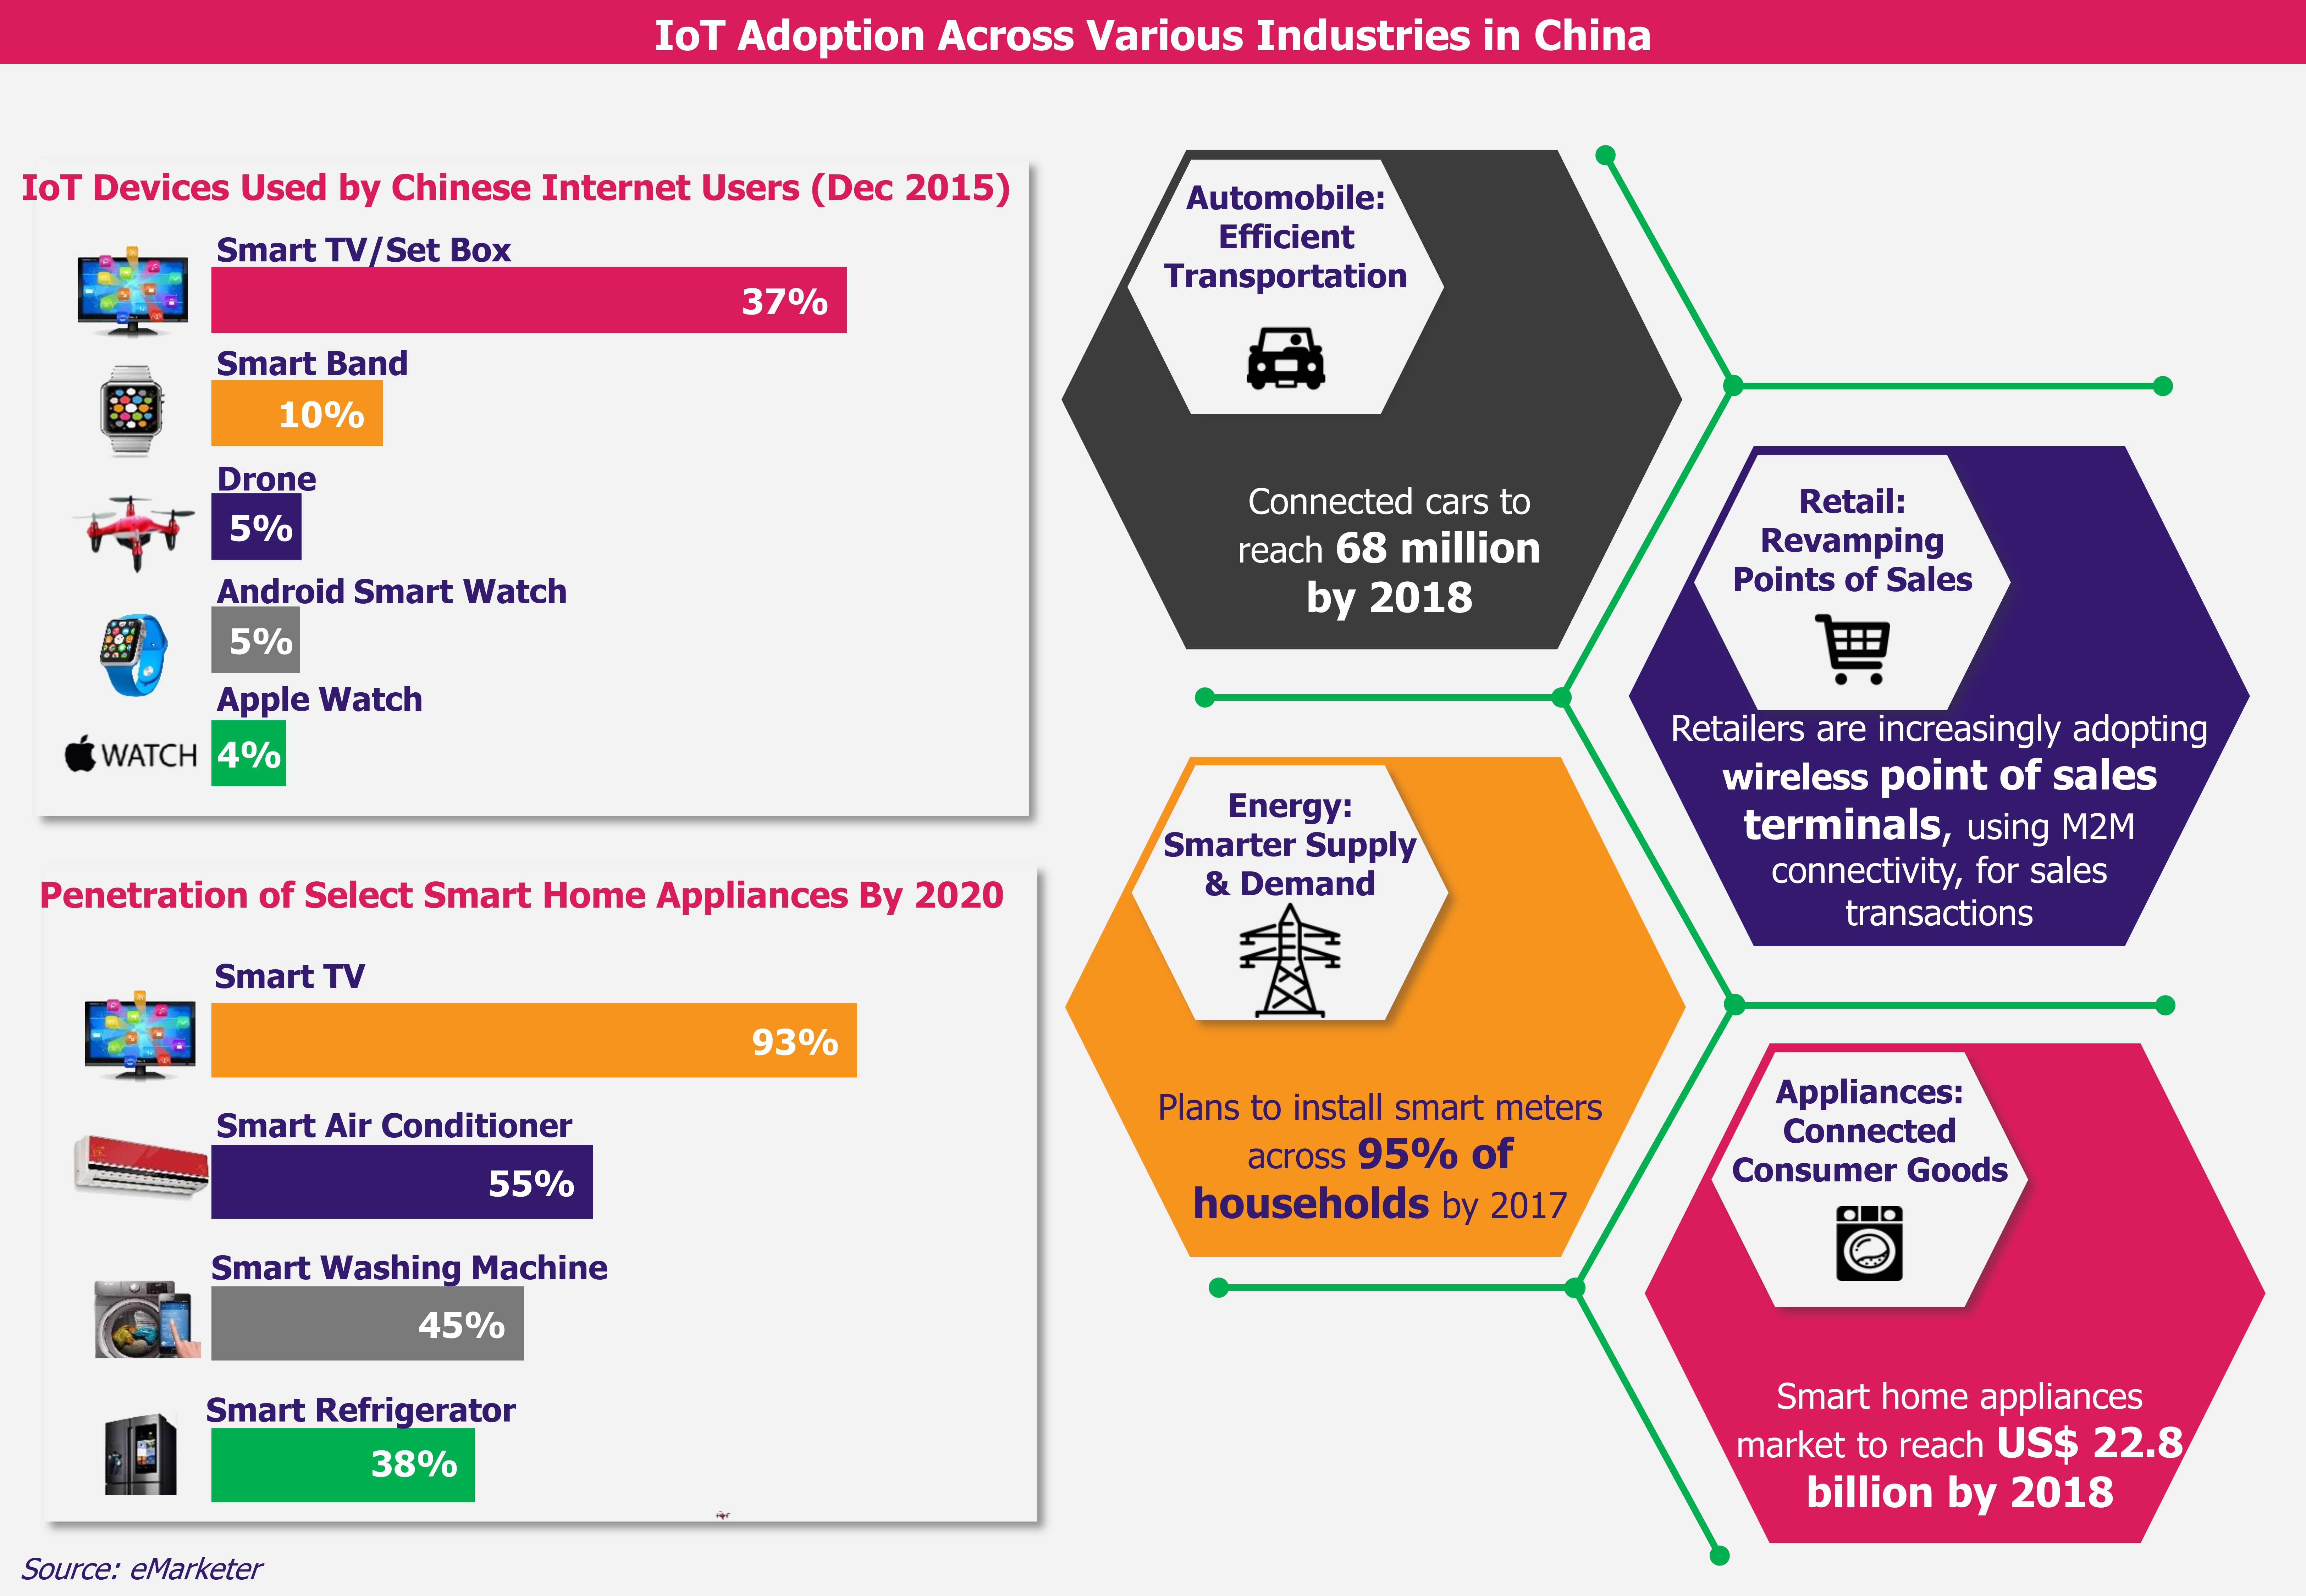 China’s Digital Single Market – IoT - Adoption